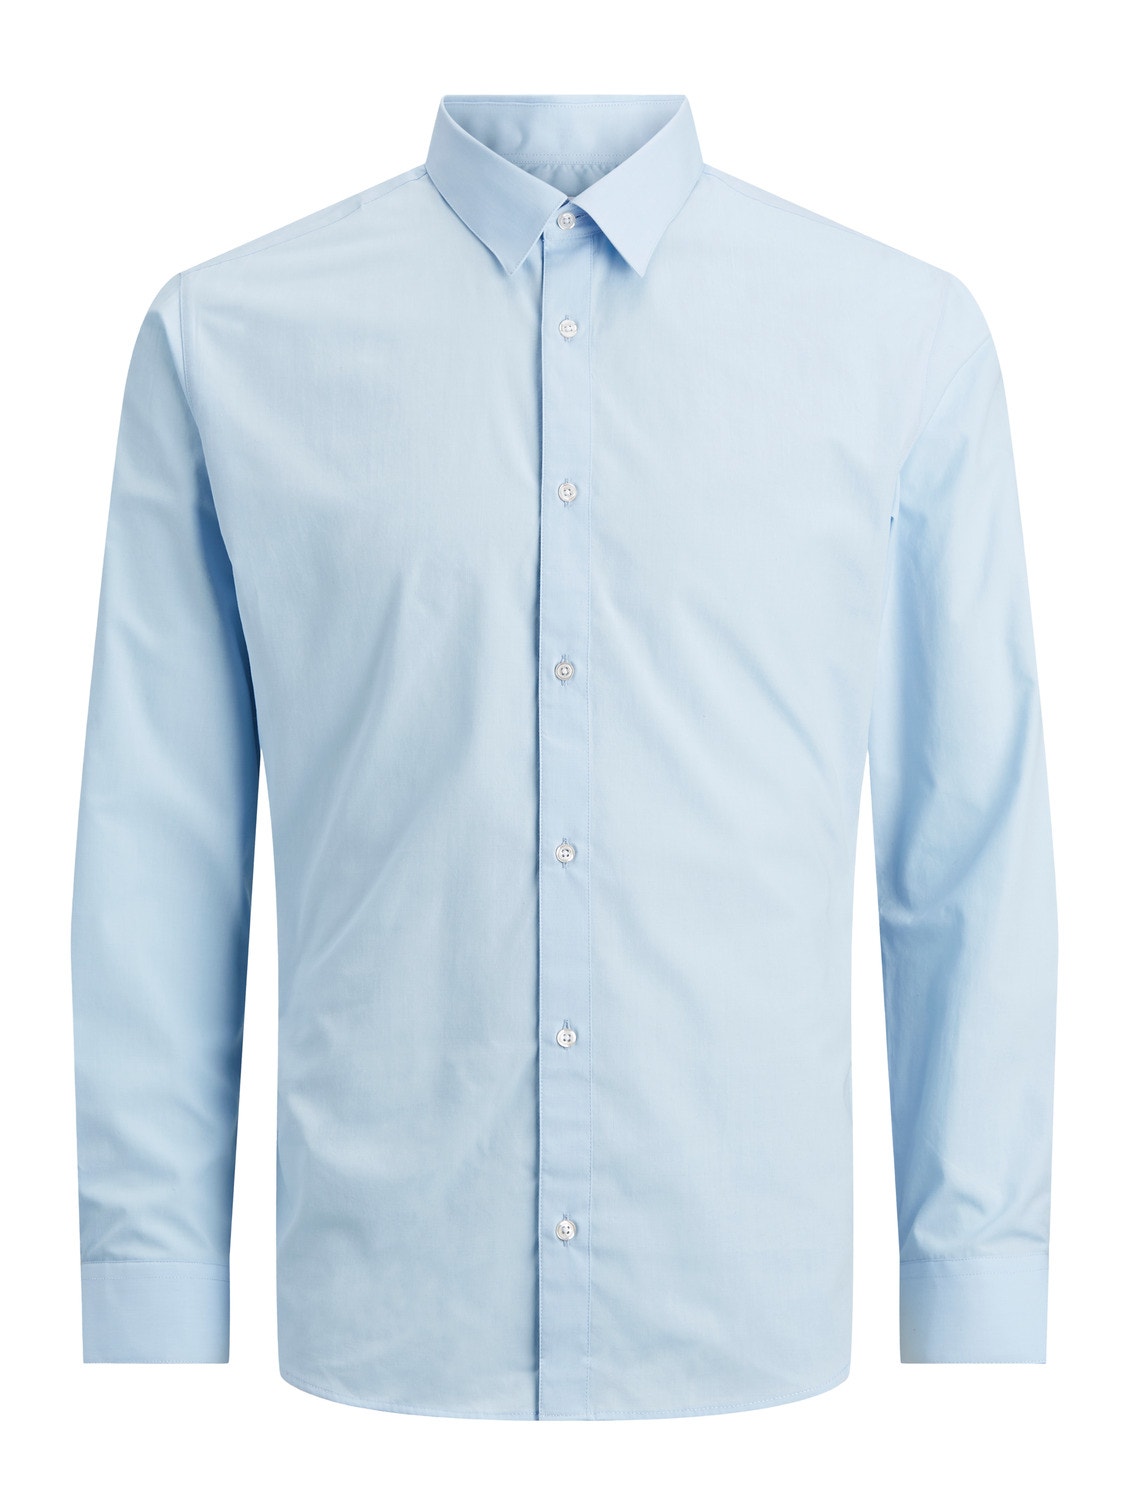 Jack & Jones Slim Fit Oficialūs marškiniai -Cashmere Blue - 12187222